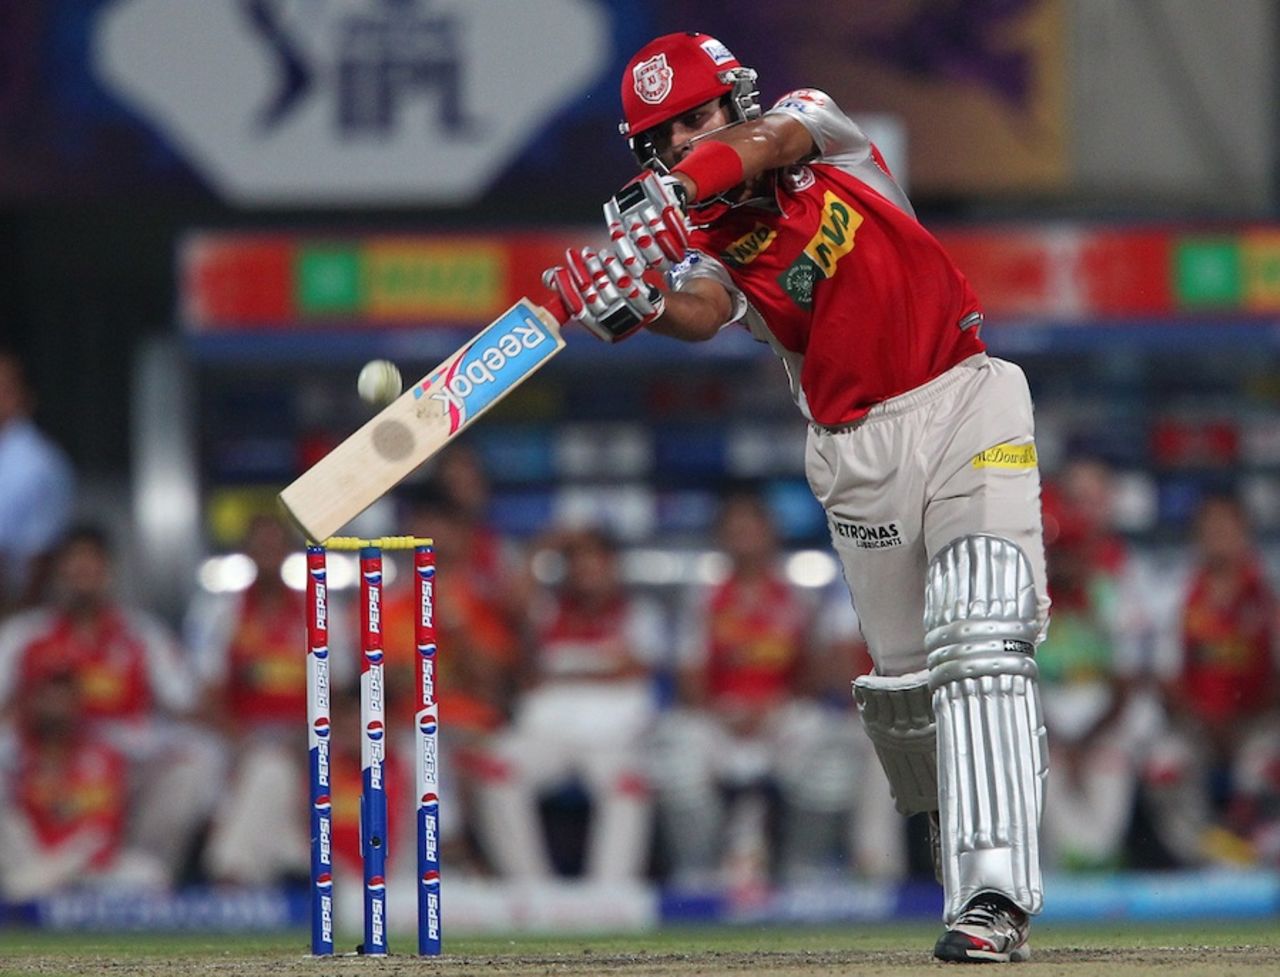 Manan Vohra attacks during his innings of 31, Kolkata Knight Riders v Kings XI Punjab, IPL, Kolkata, April 26, 2013